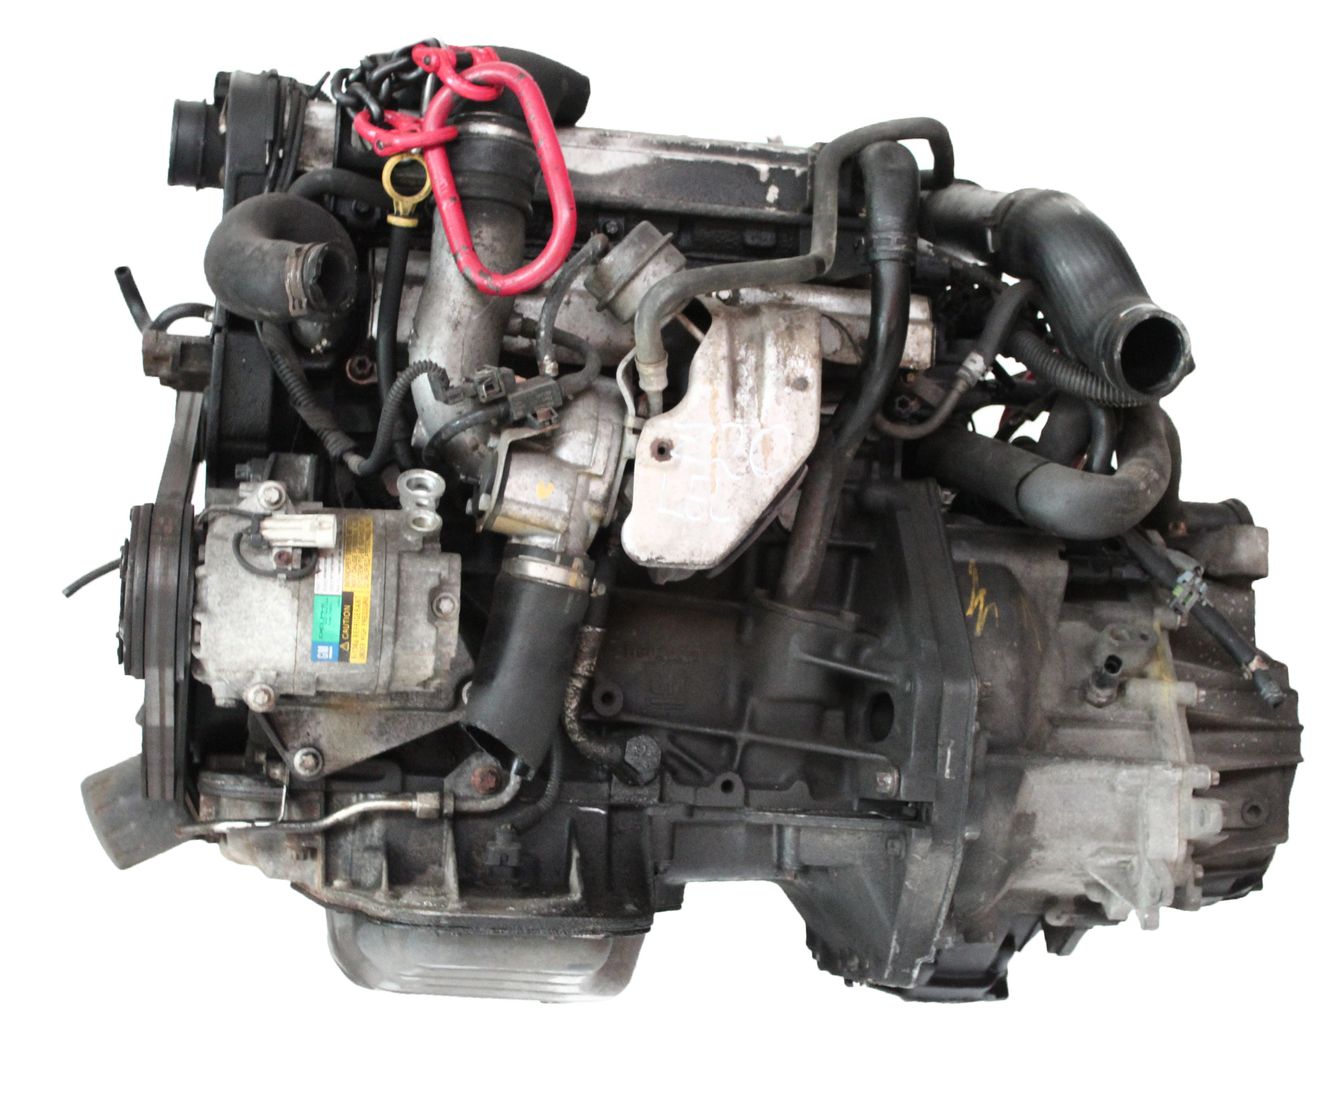 Motor 2004 Opel Astra H 2,0 Turbo Z20 Z20LEL mit Getriebe und Anbauteilen neu angelegt 